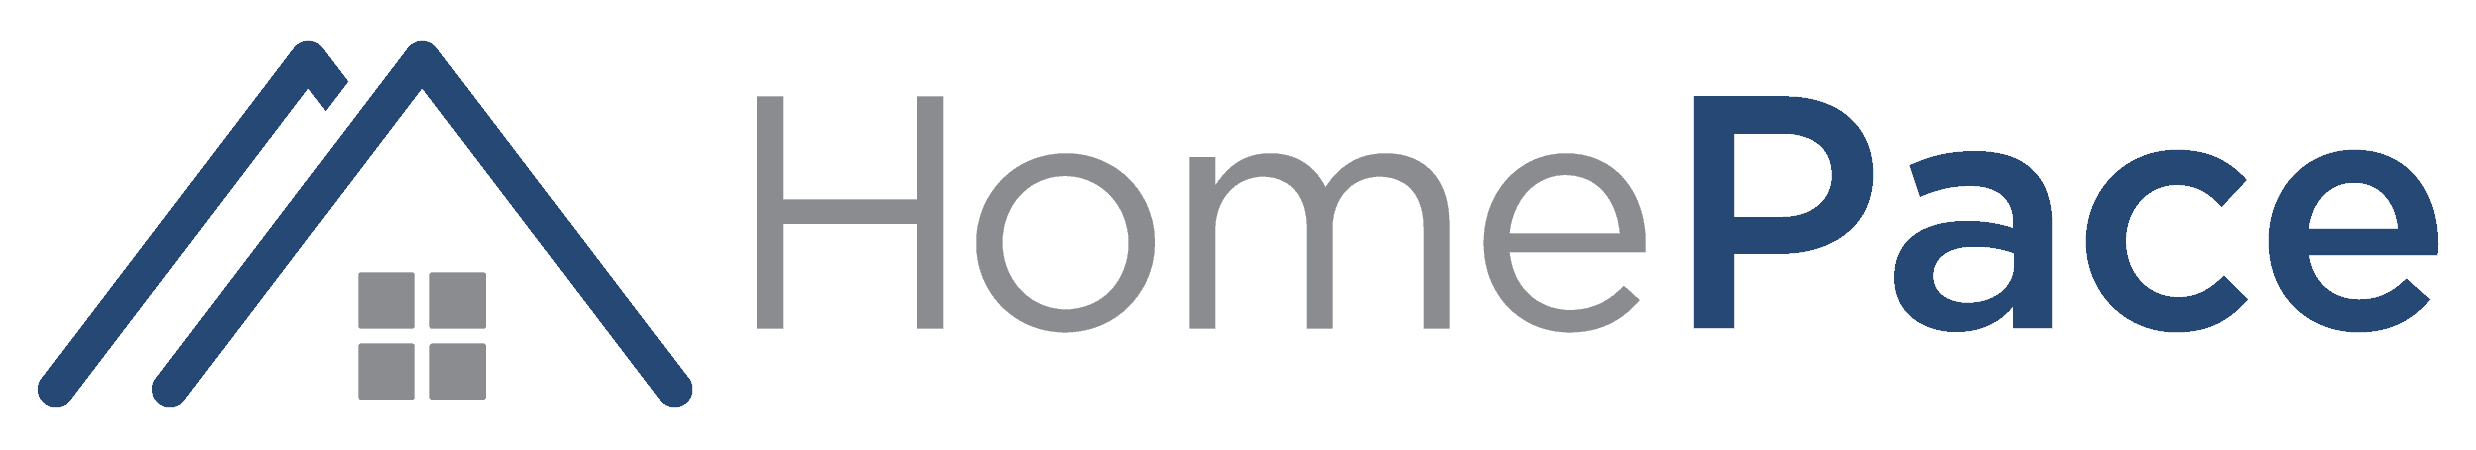 homepace logo